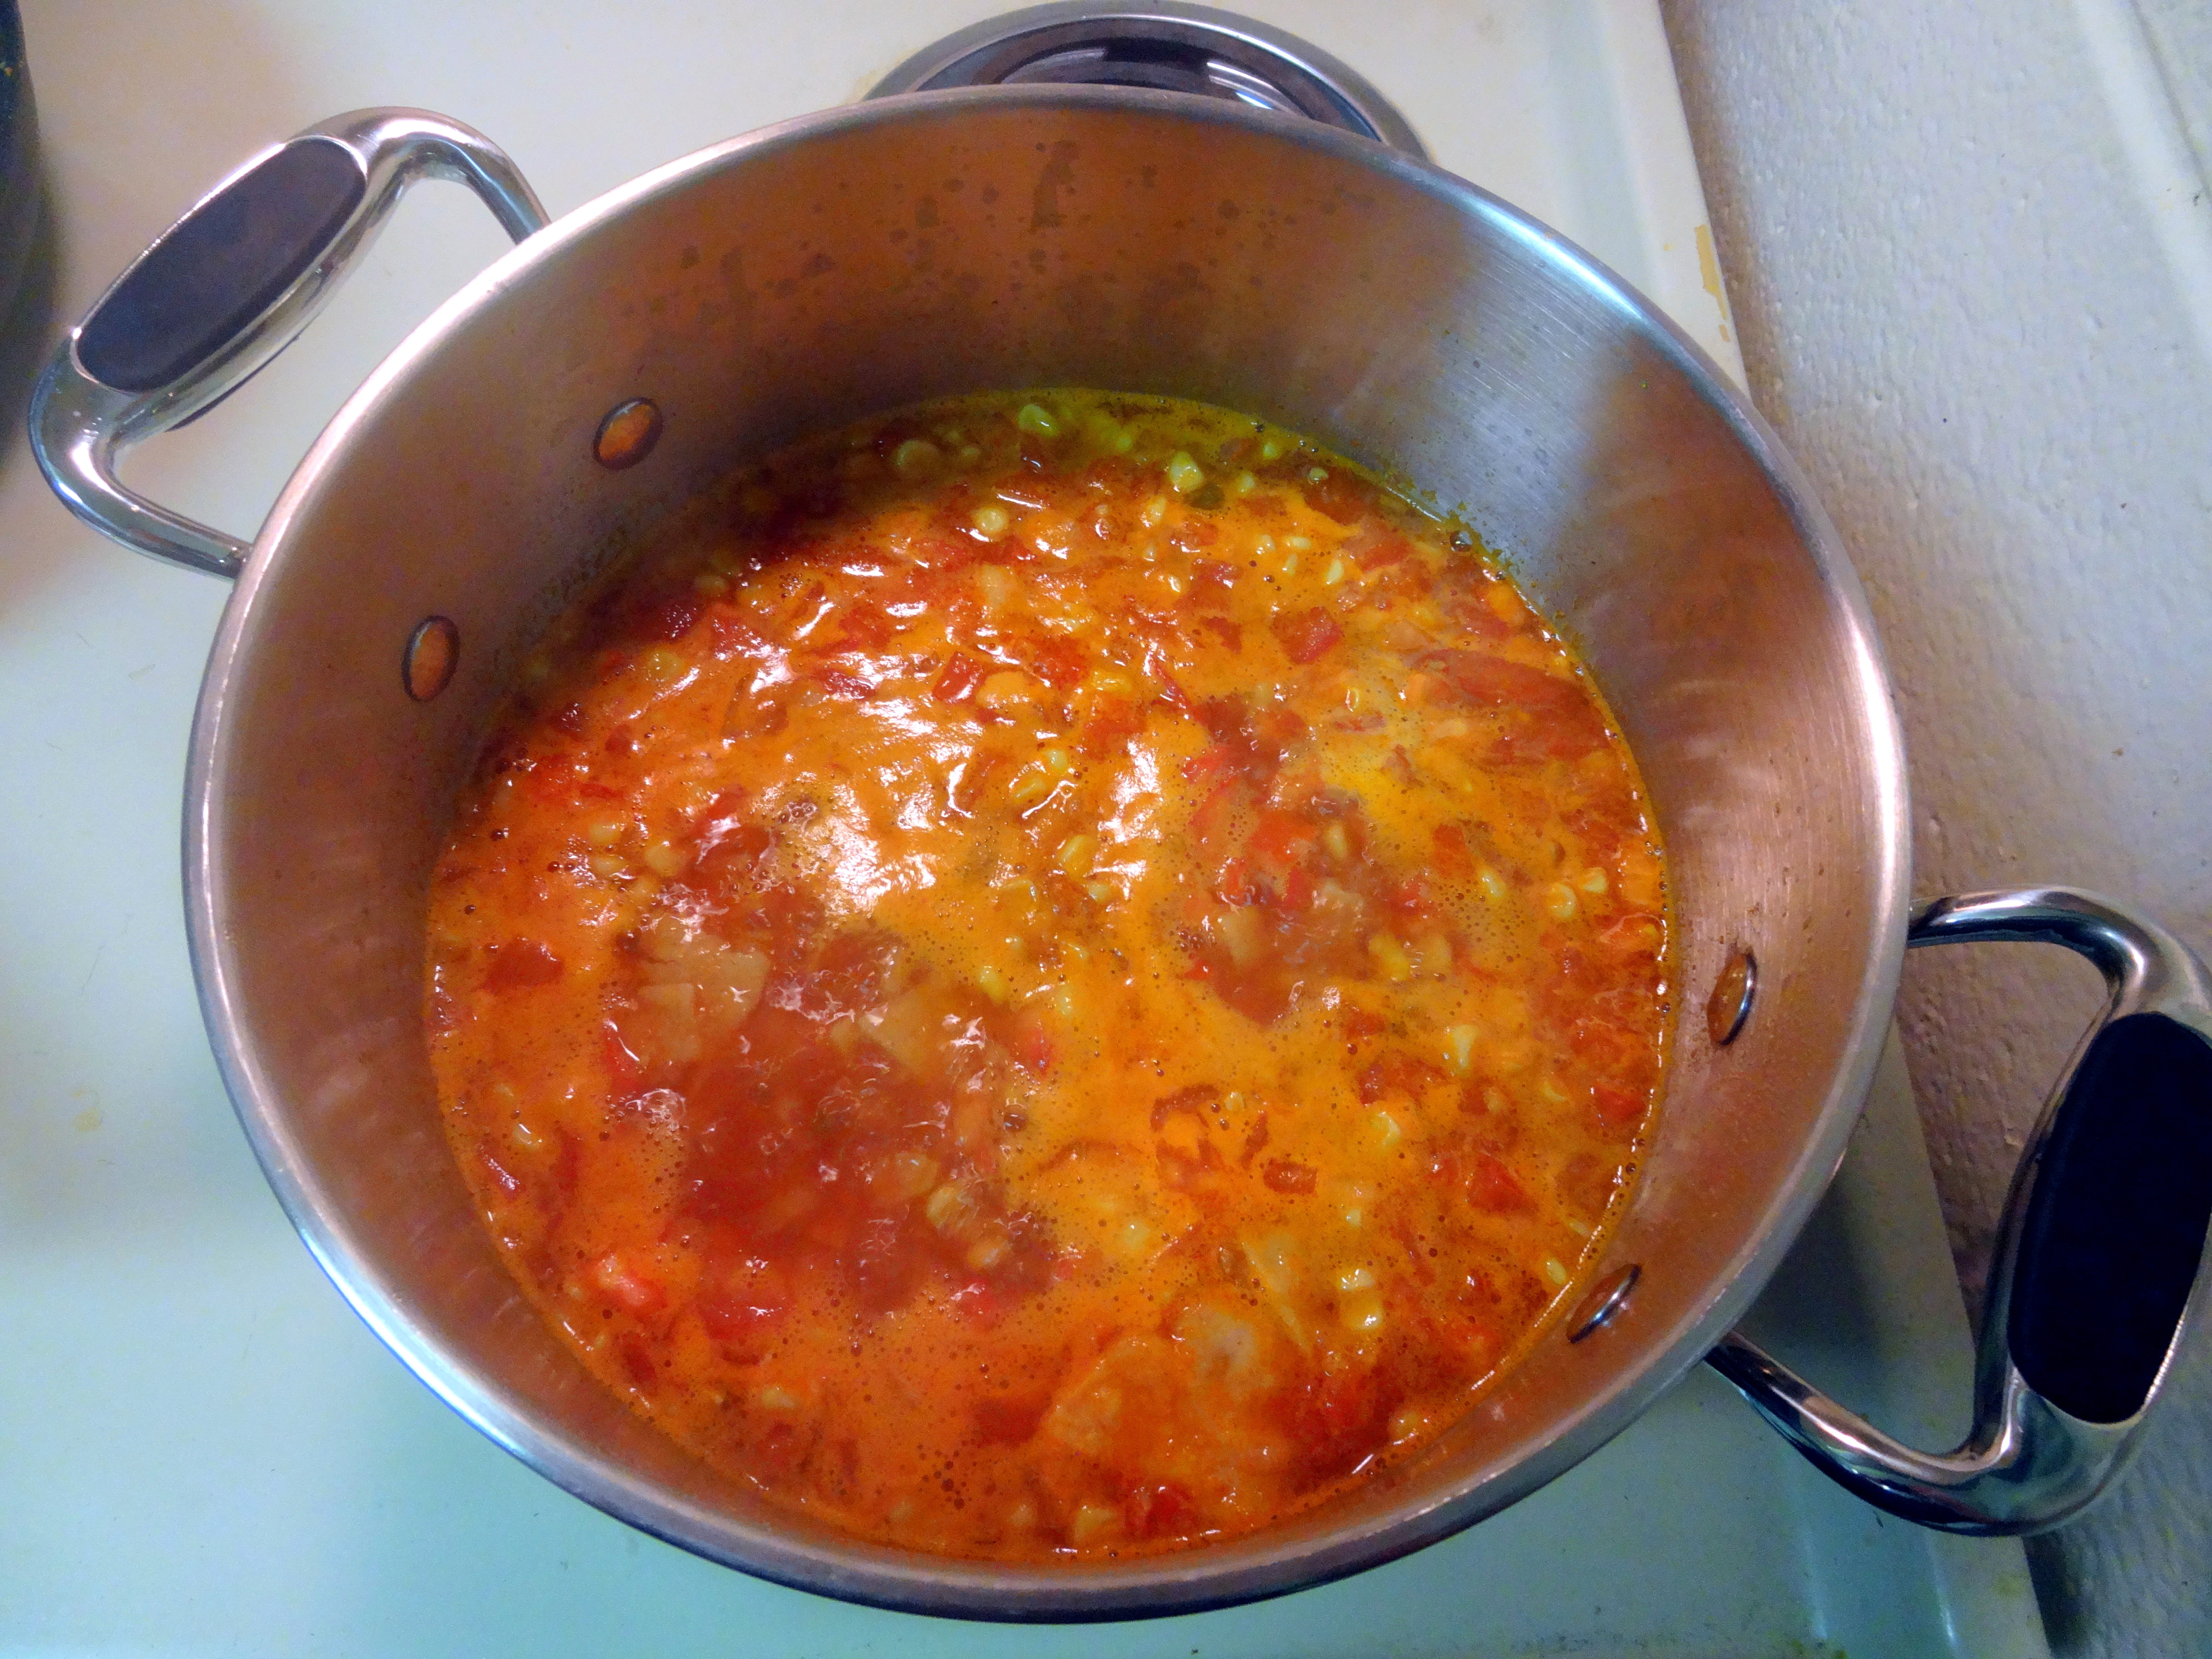 Sedona corn soup